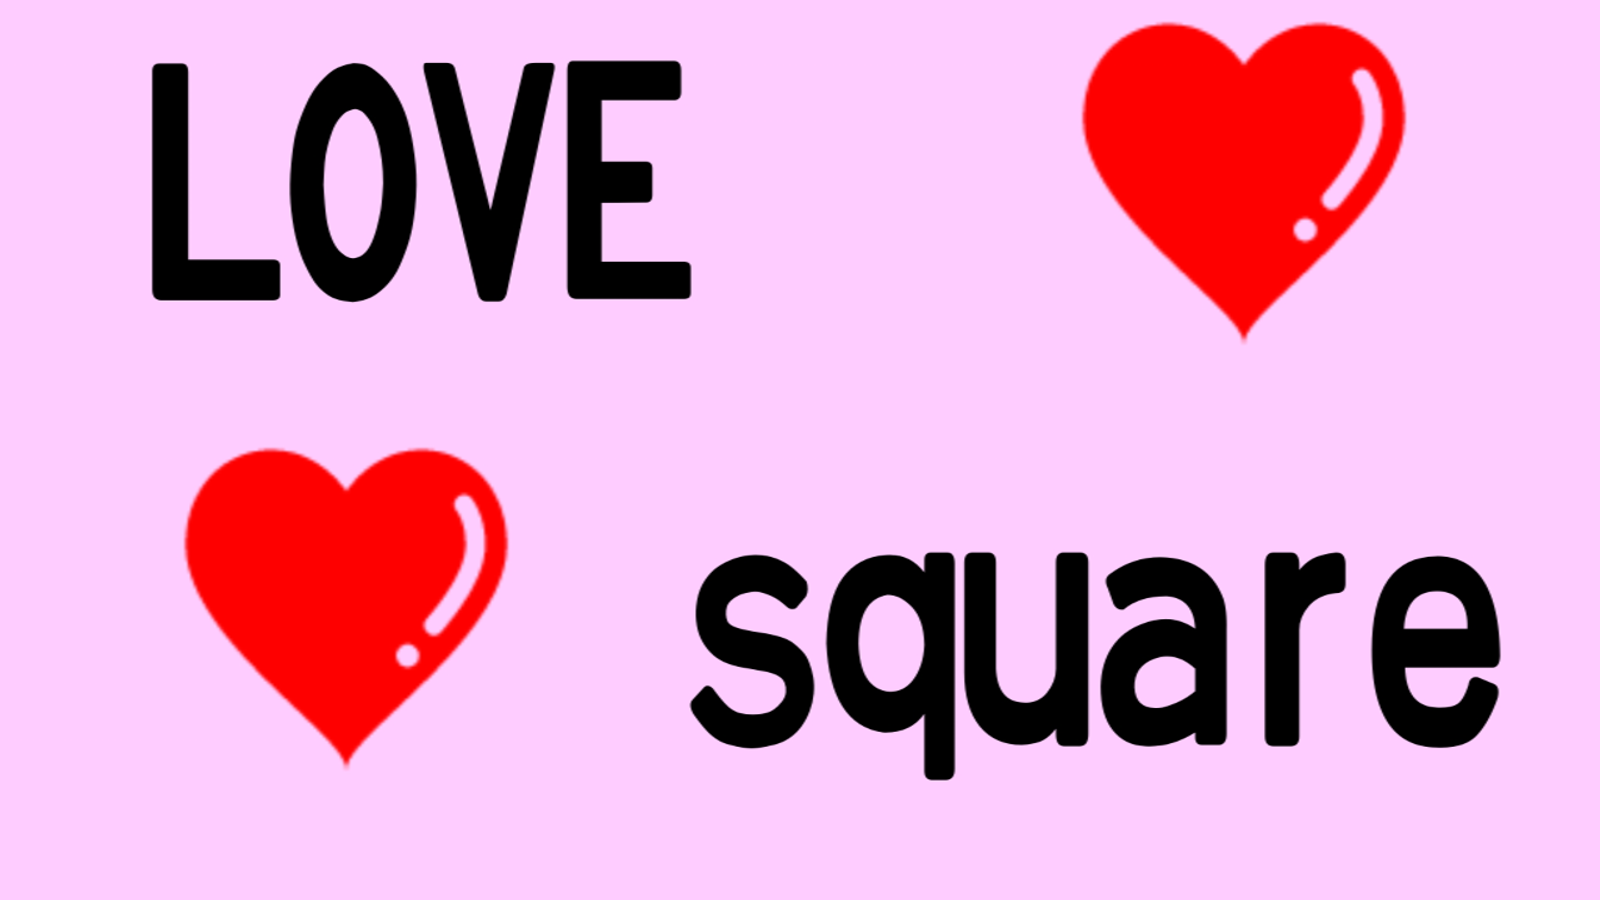 Love square